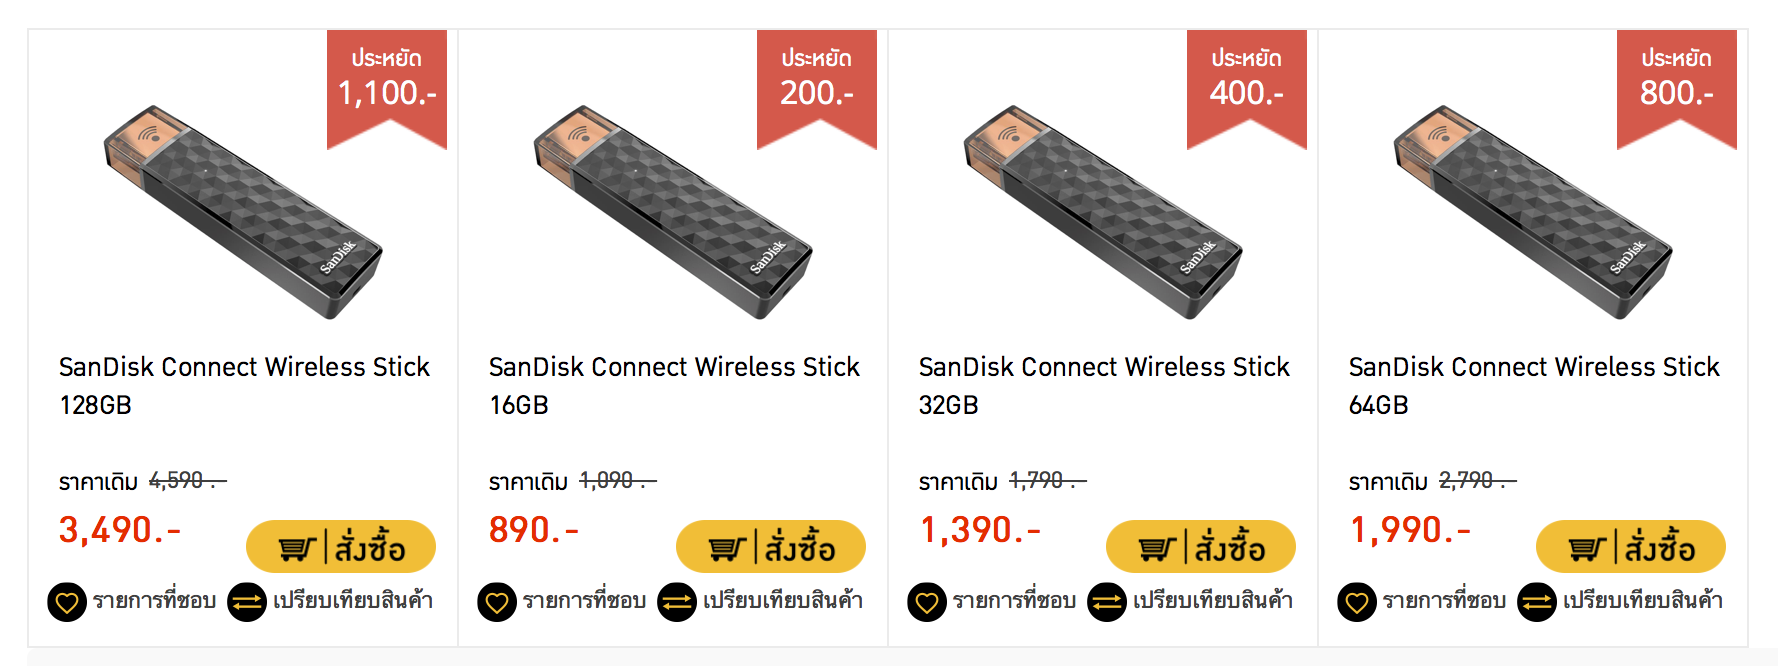 [BananaStore] แฟลชไดรฟ์ไร้สาย Sandisk Connect Wireless Stick ราคาดีที่สุด เริ่มต้น 890 บาท!!